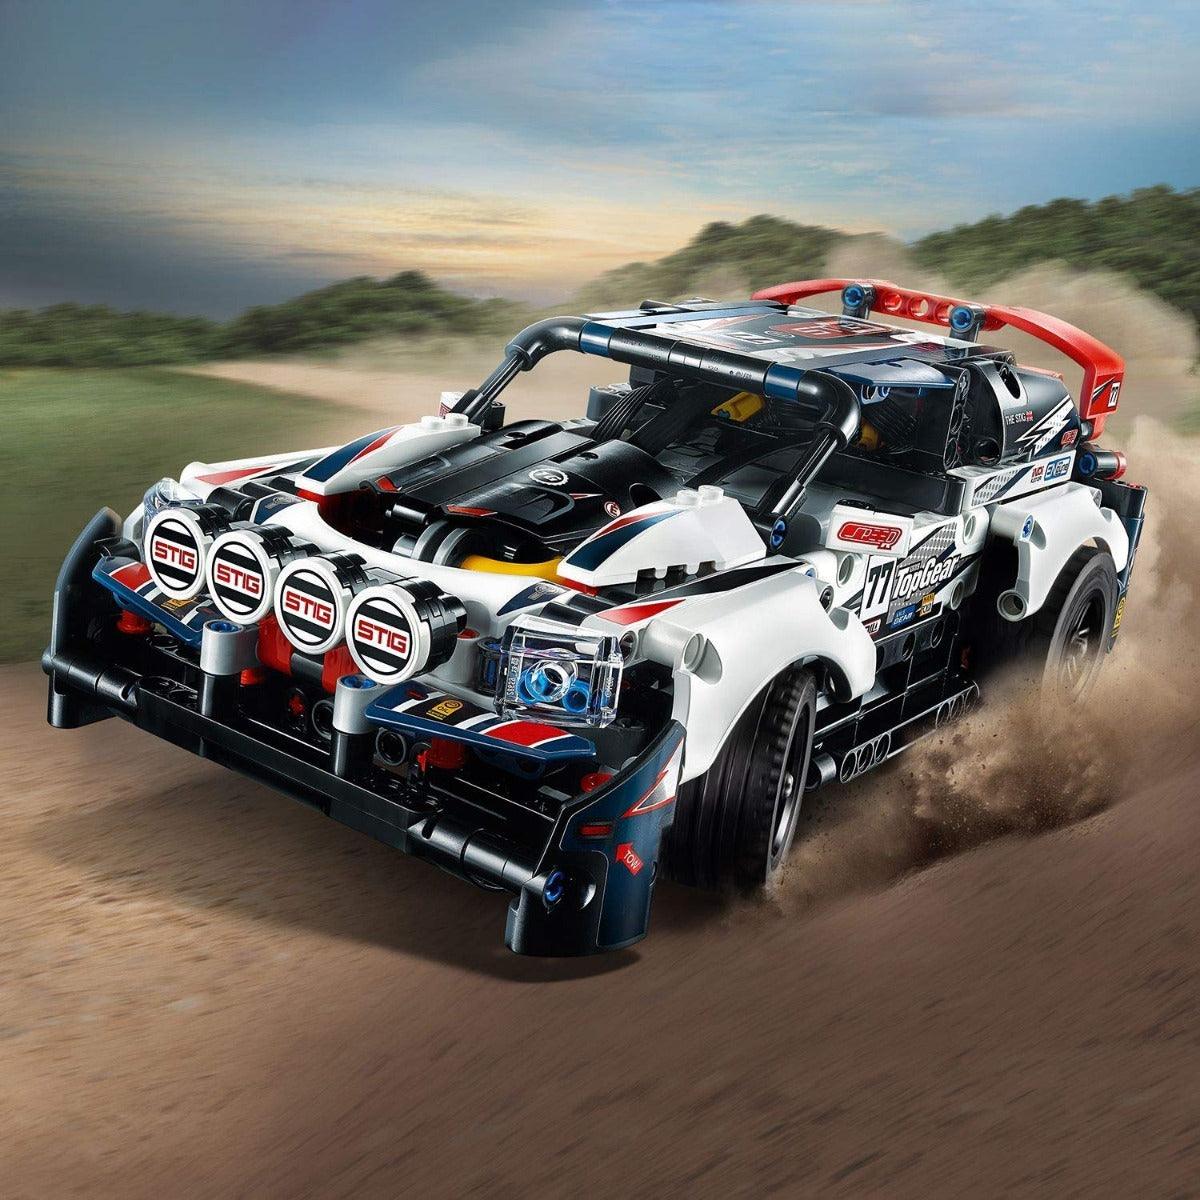 LEGO Technic App-Controlled Top Gear Rally Car Building Set